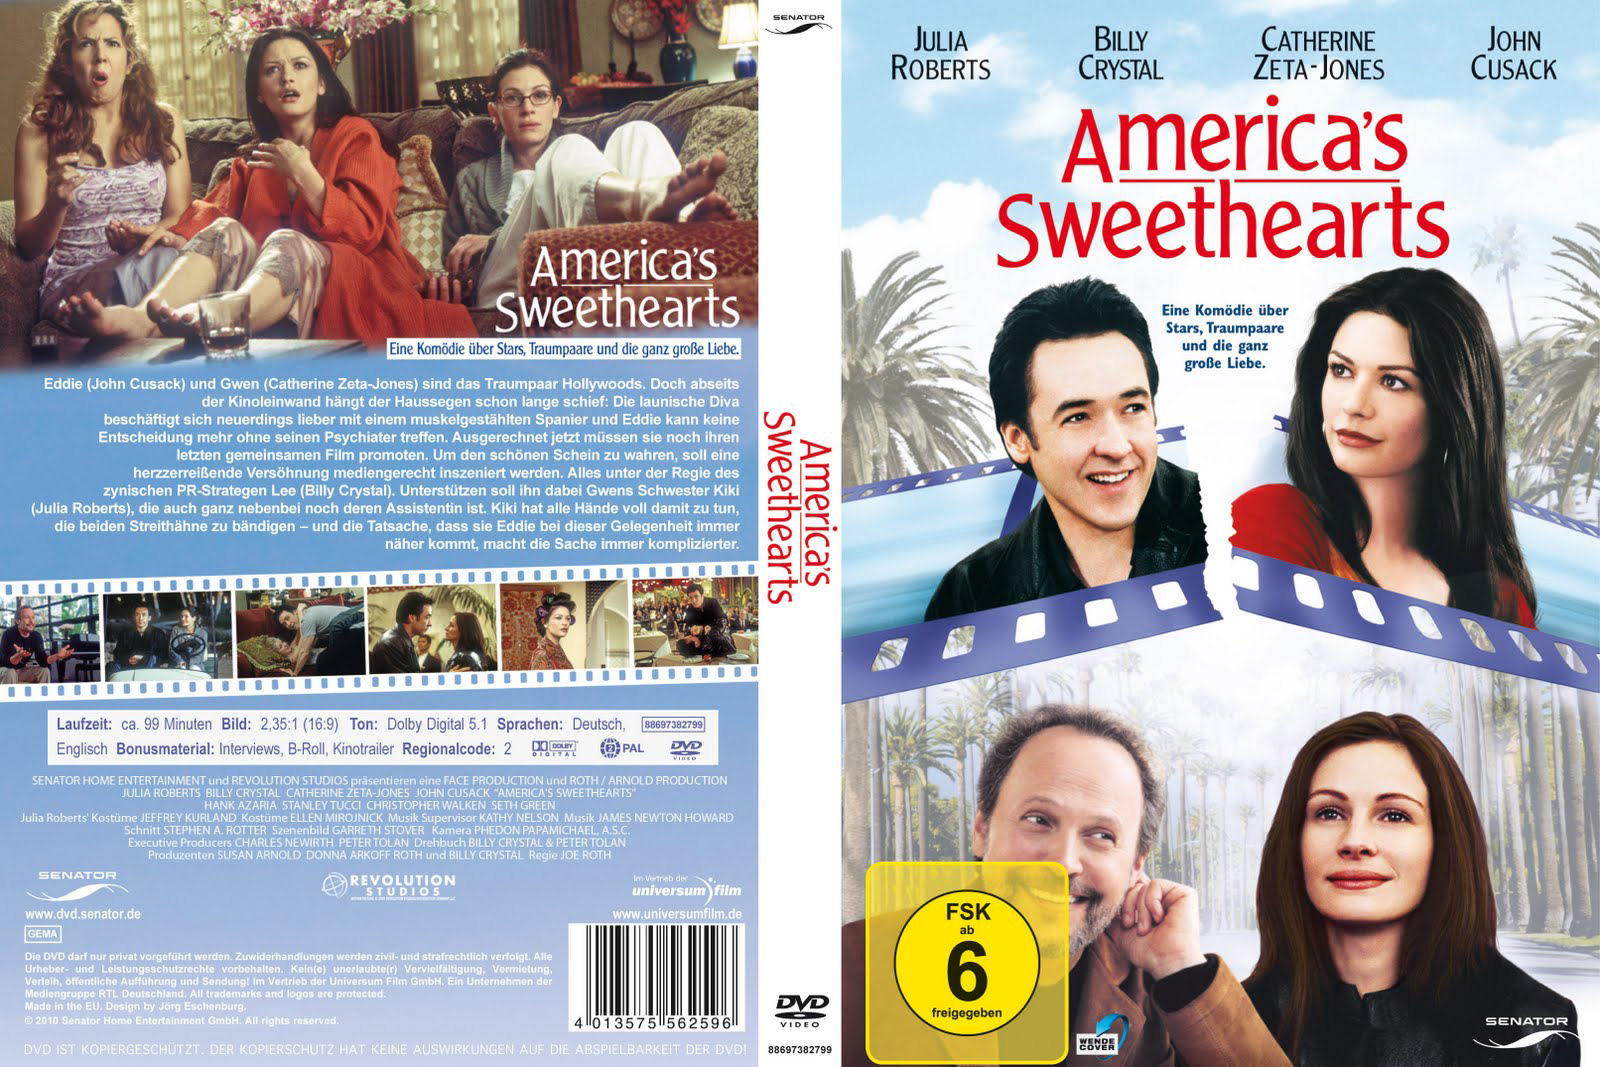 America's Sweethearts (2001) Julia Roberts